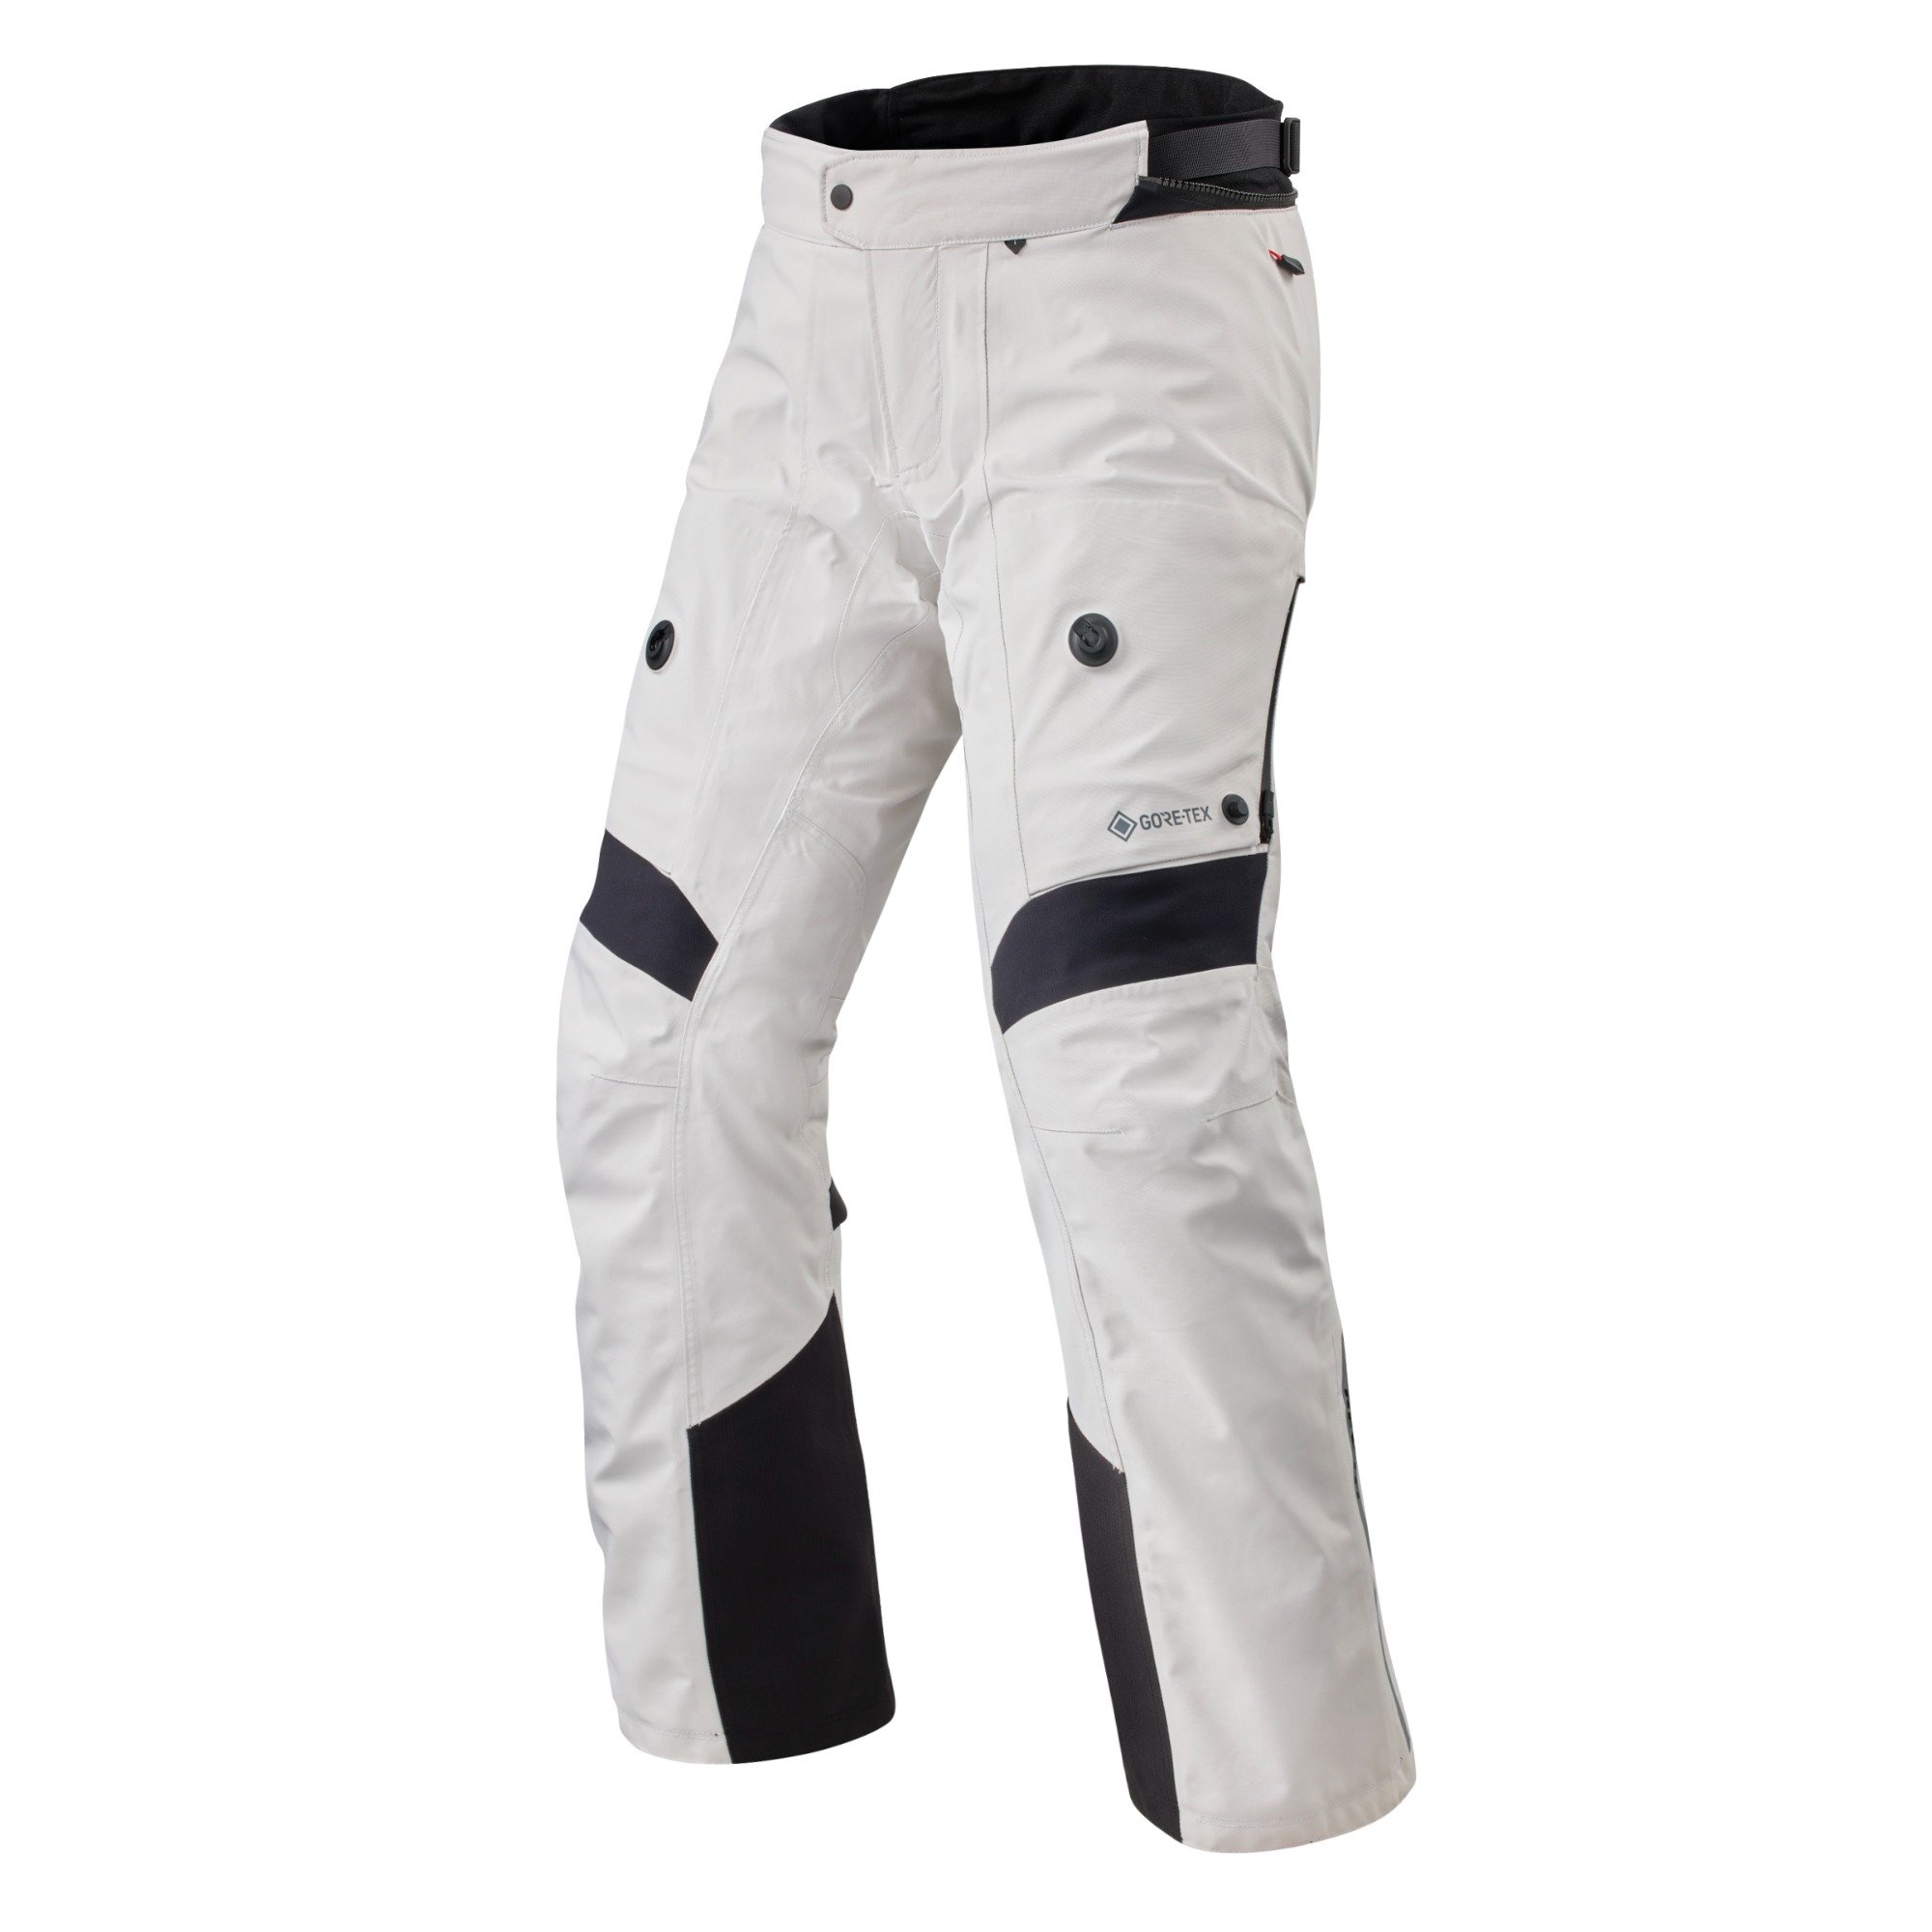 Image of REV'IT! Pants Poseidon 3 GTX Silver Black Standard Motorcycle Pants Size M EN